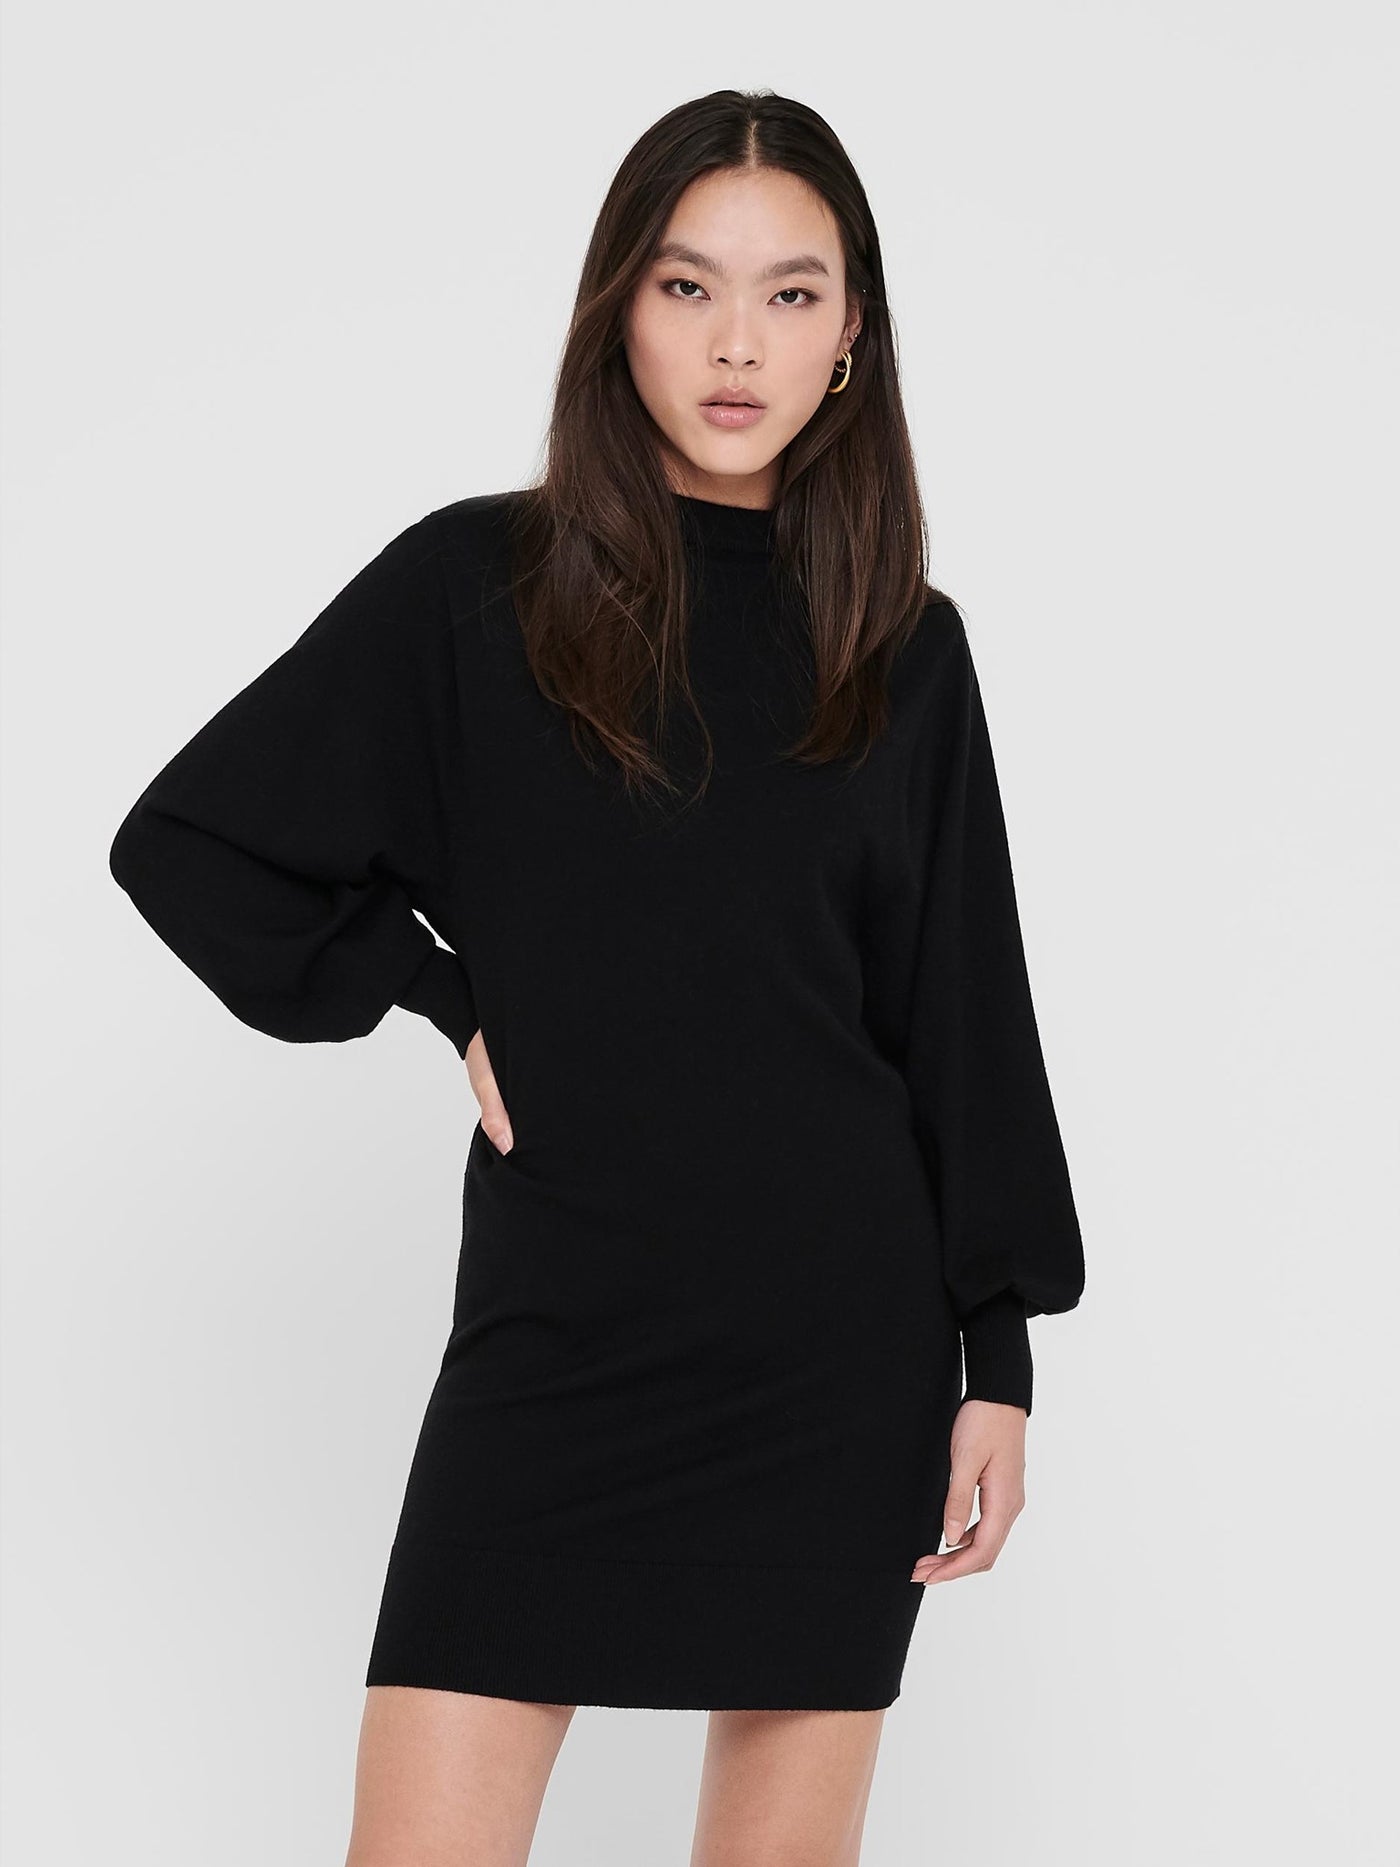 Labelle Knit Dress - Black - ONLY - Black 2